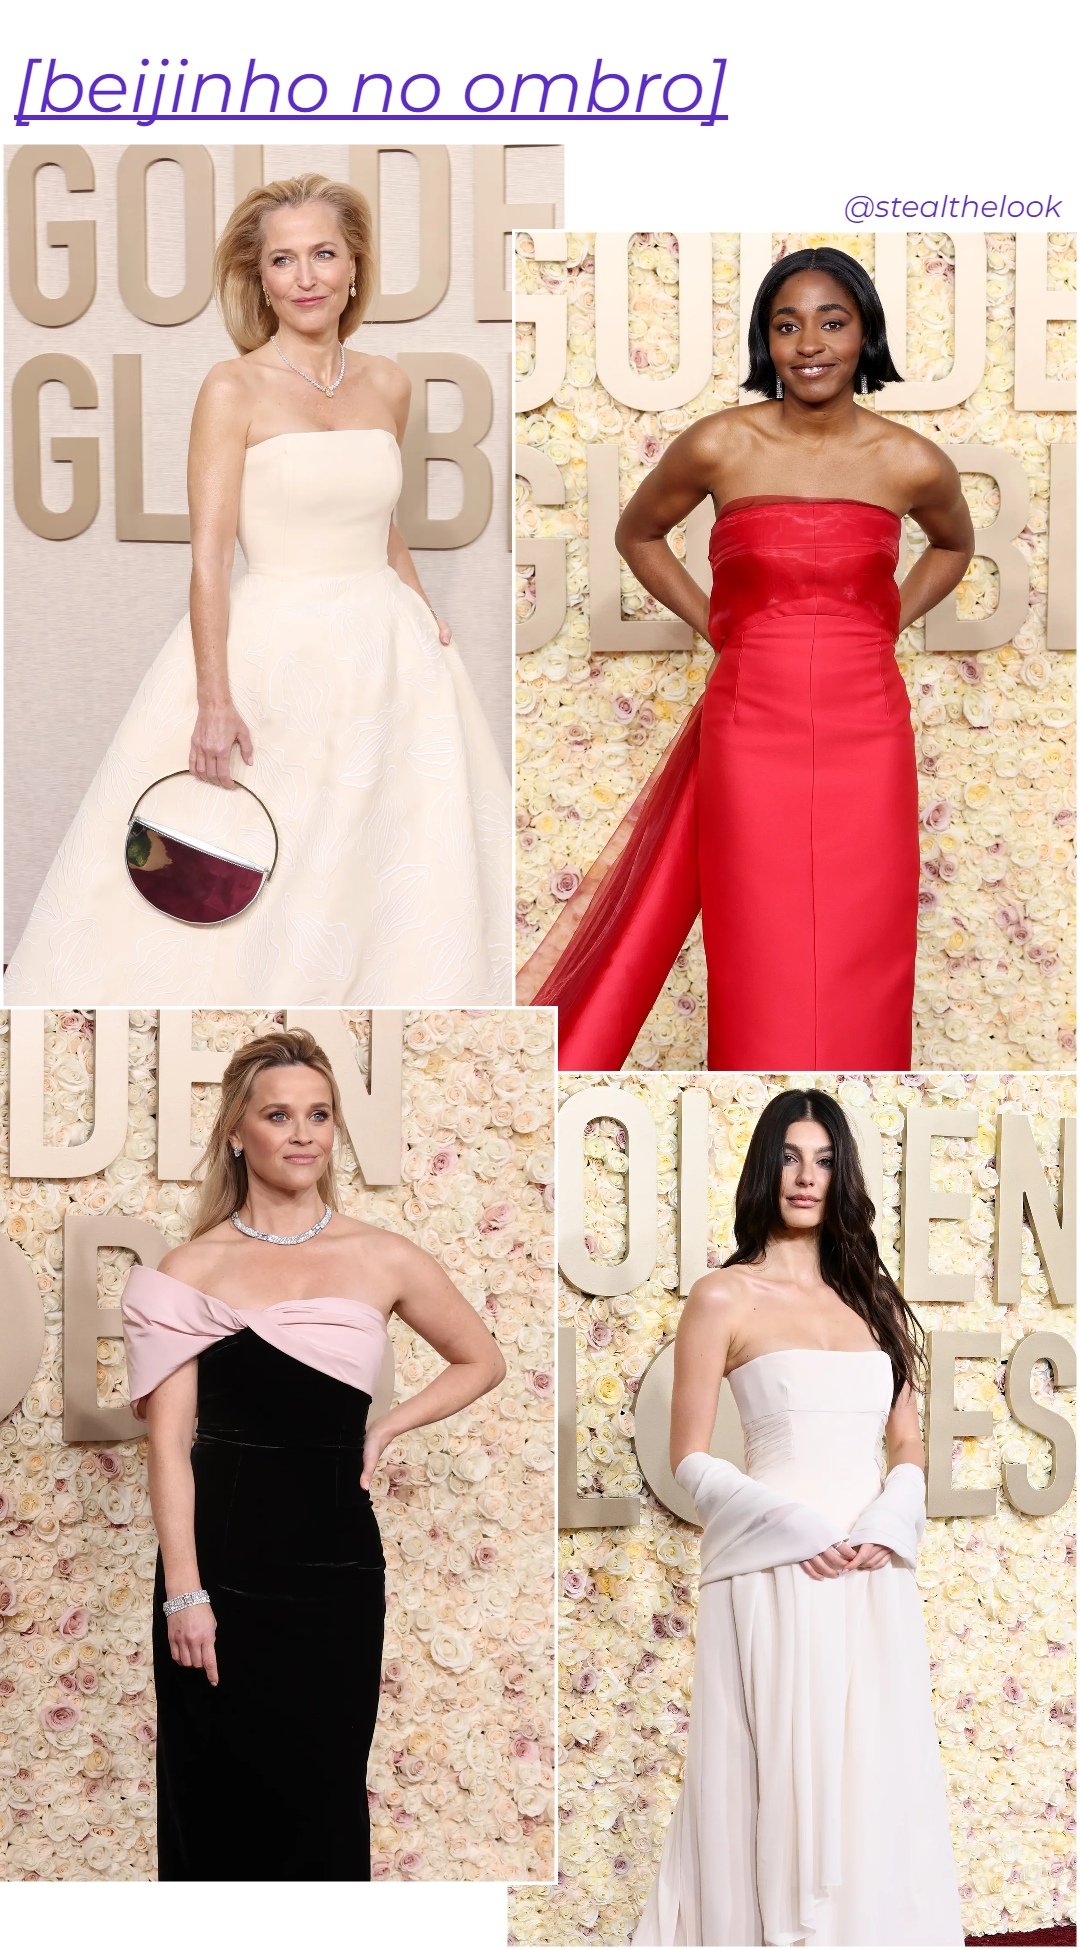 Reese Witherspoon, Gillian Anderson, Camila Morrone e Hari Nef - roupas diversas - Globo de Ouro - primavera - colagem de imagens - https://stealthelook.com.br